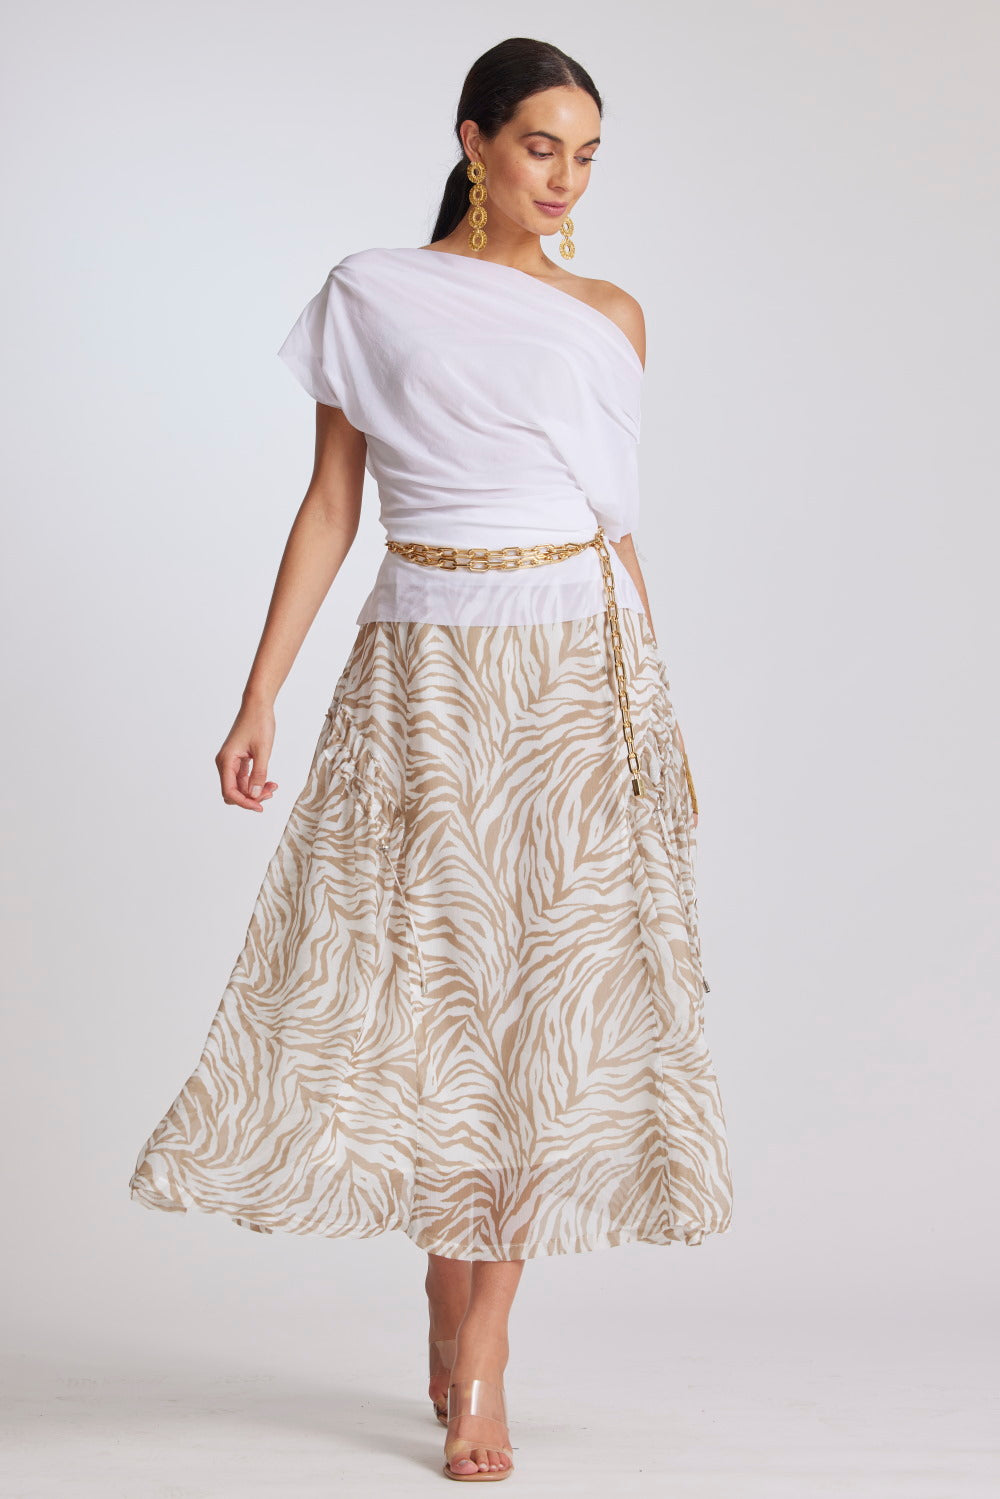 Paula Ryan Arched Skirt - Ivory/Sand